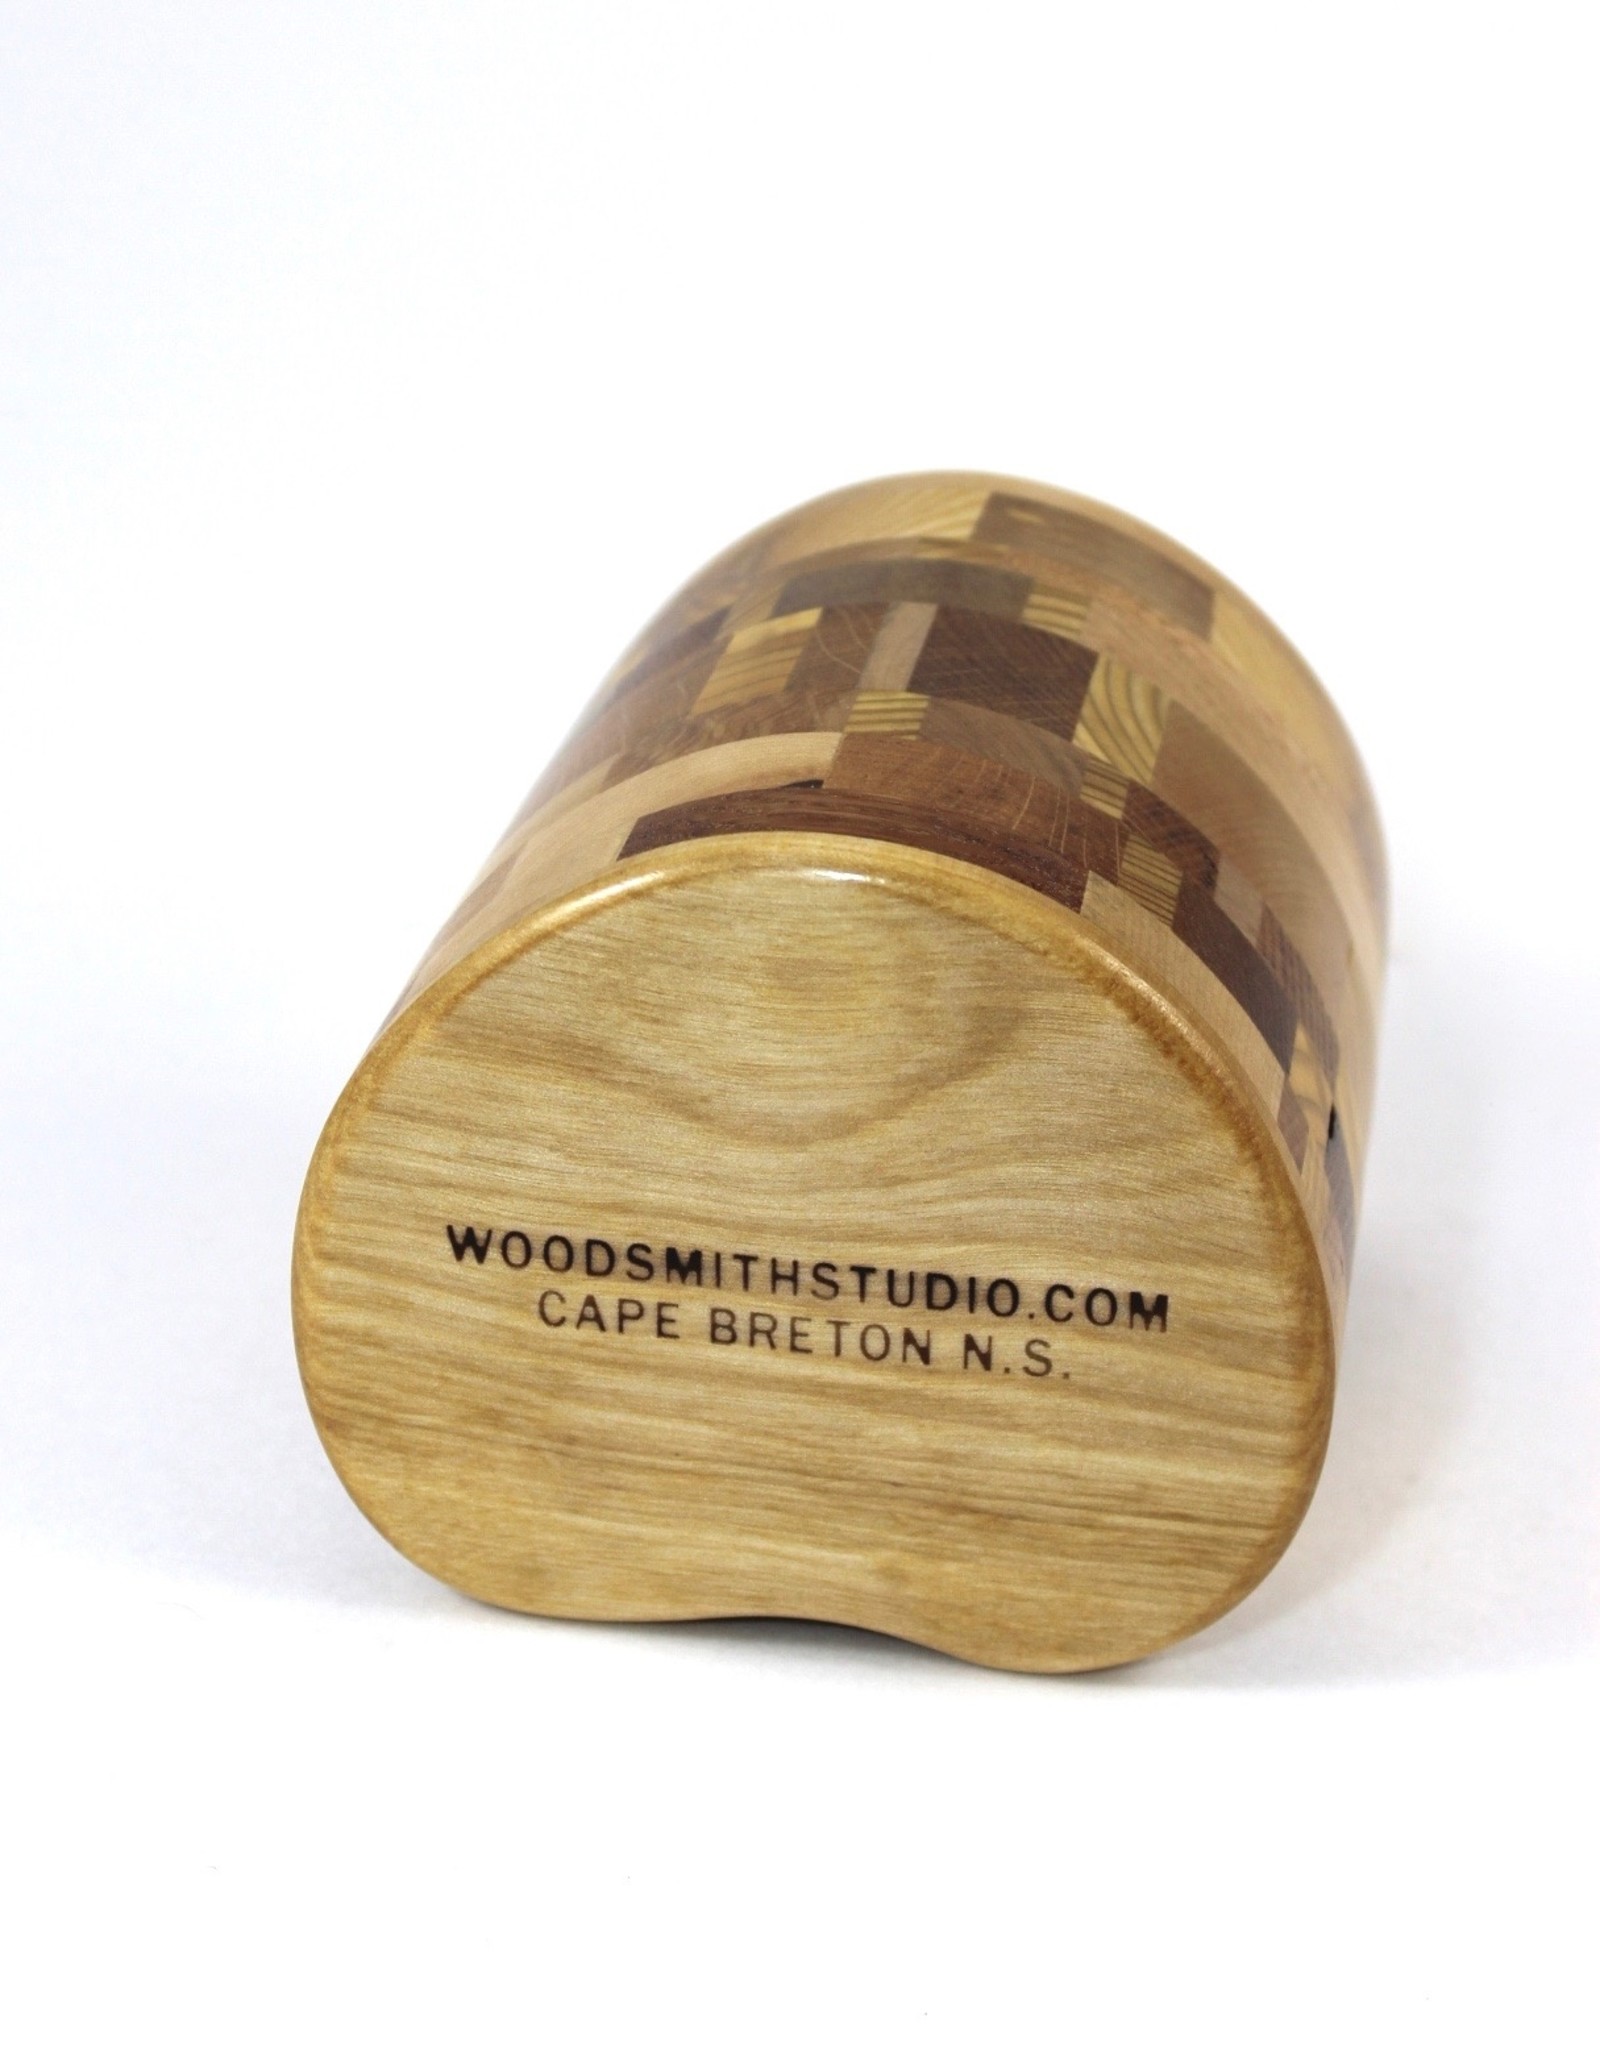 Robert Evans/Woodsmiths Medium Pencil Box by Woodsmiths